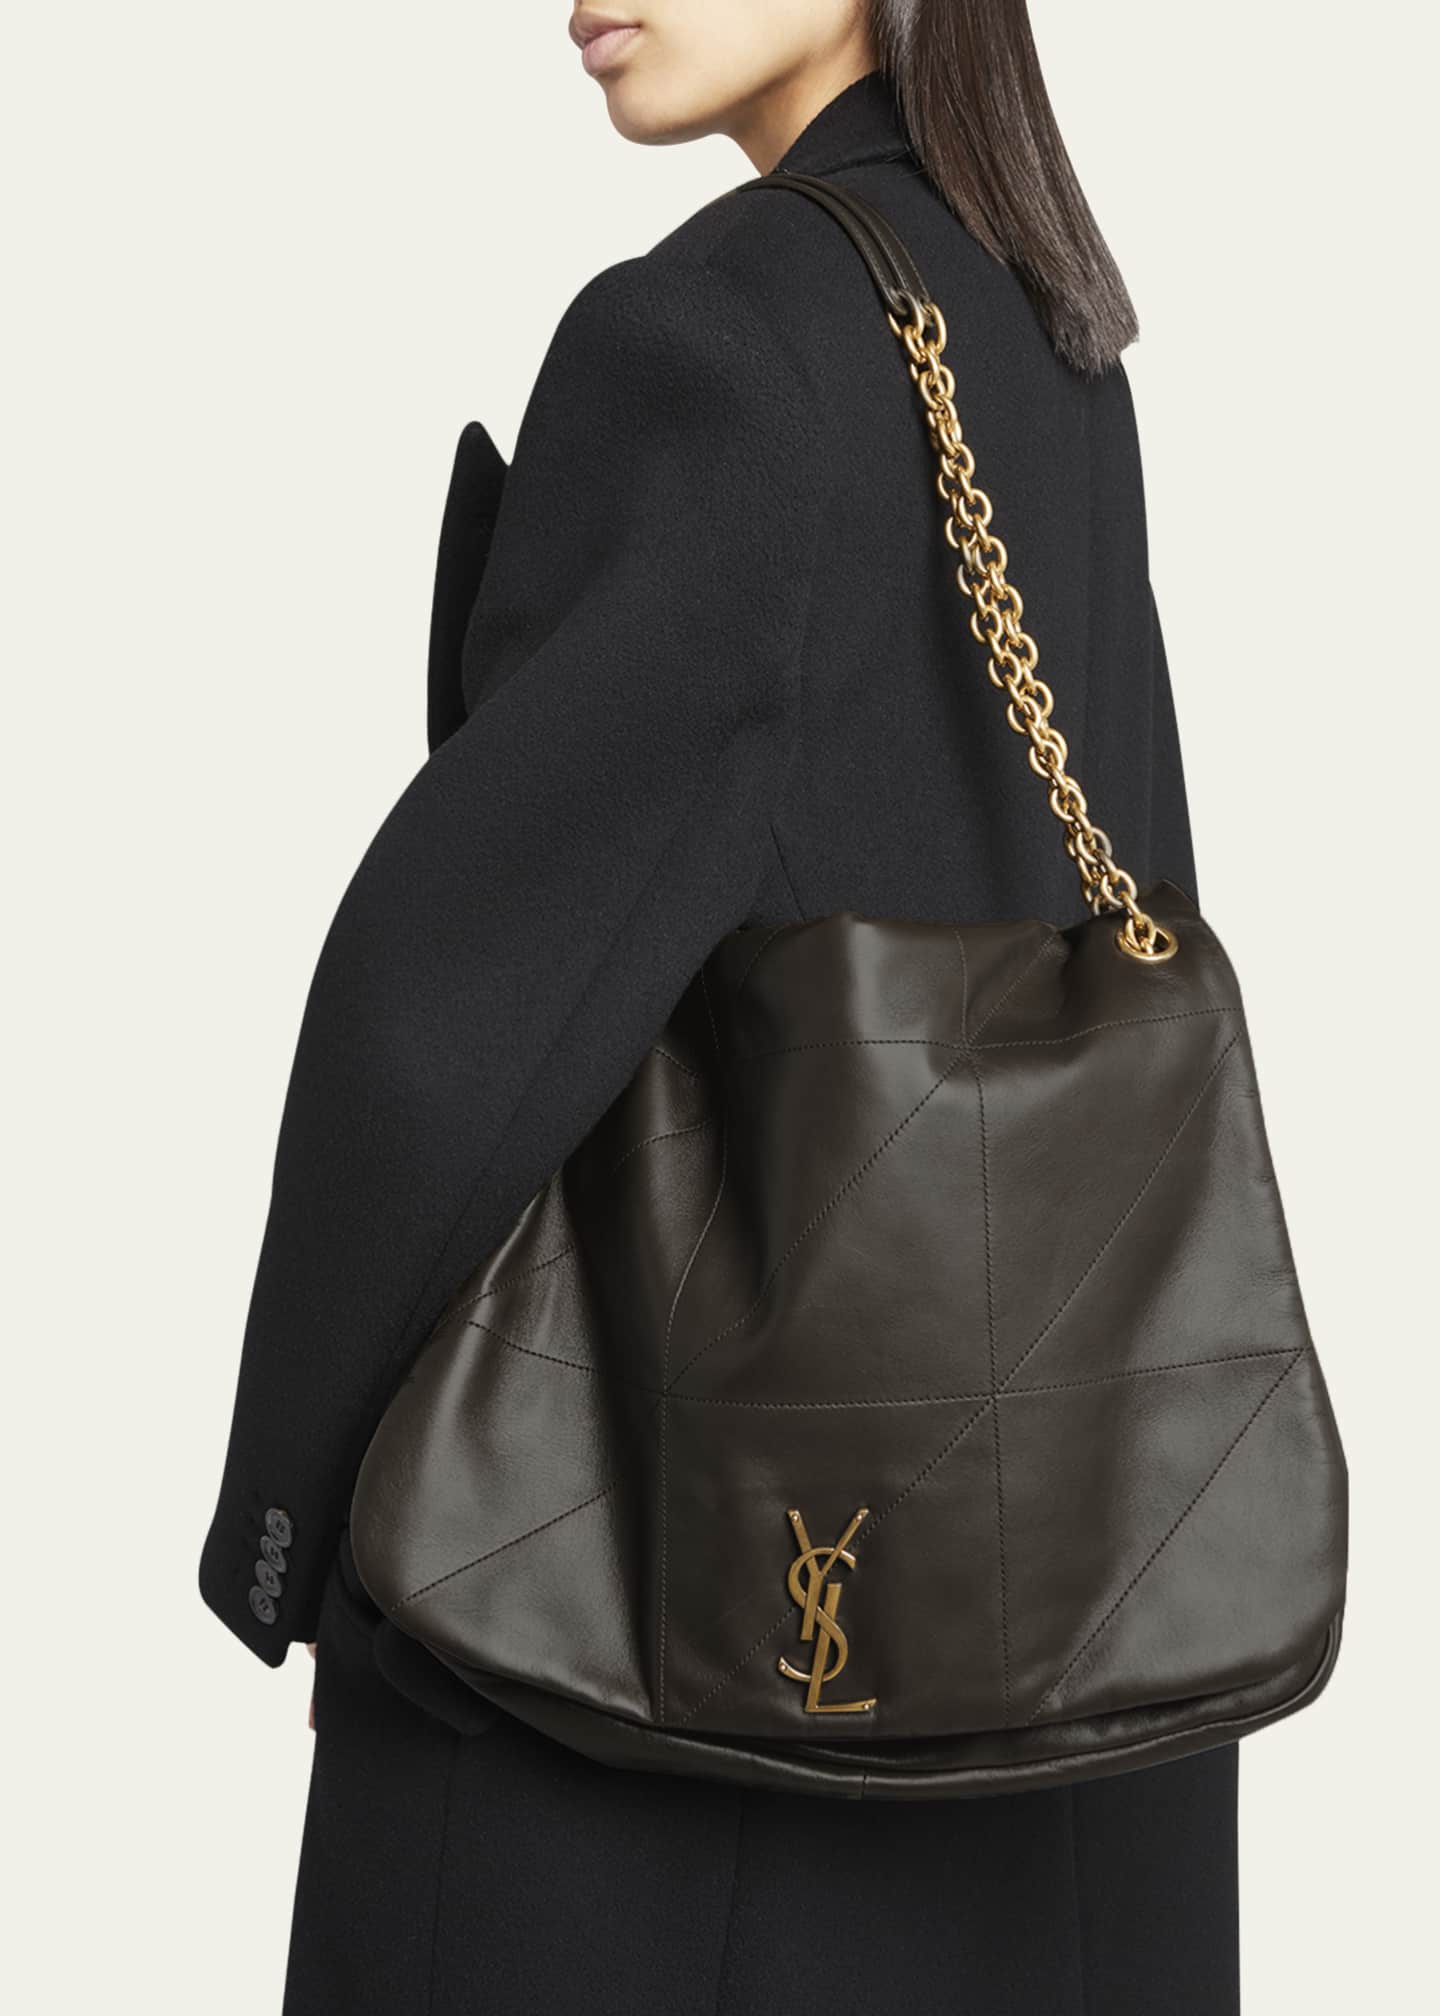 Saint Laurent Jamie 4.3 Maxi YSL Shoulder Bag in Smooth Leather ...